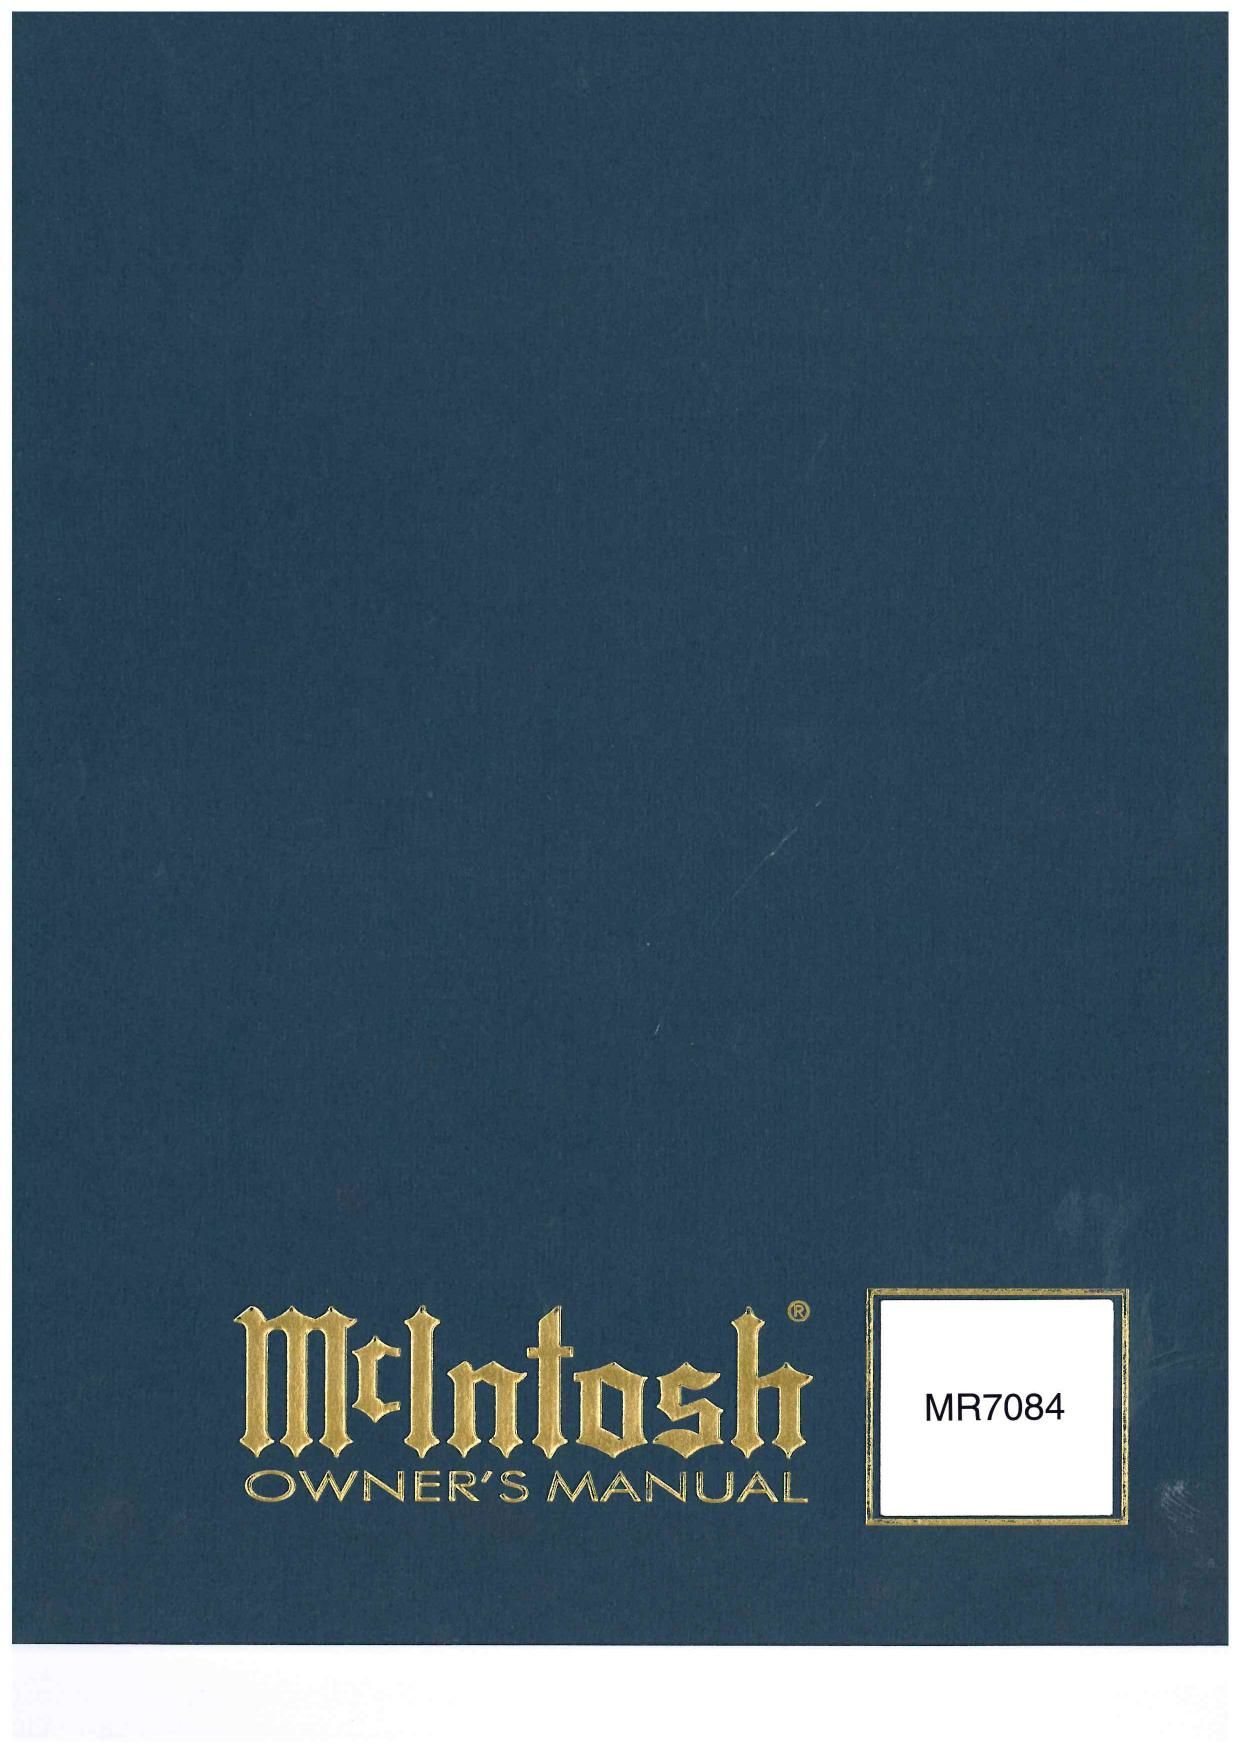 Mcintosh MR 7084 Owners Manual